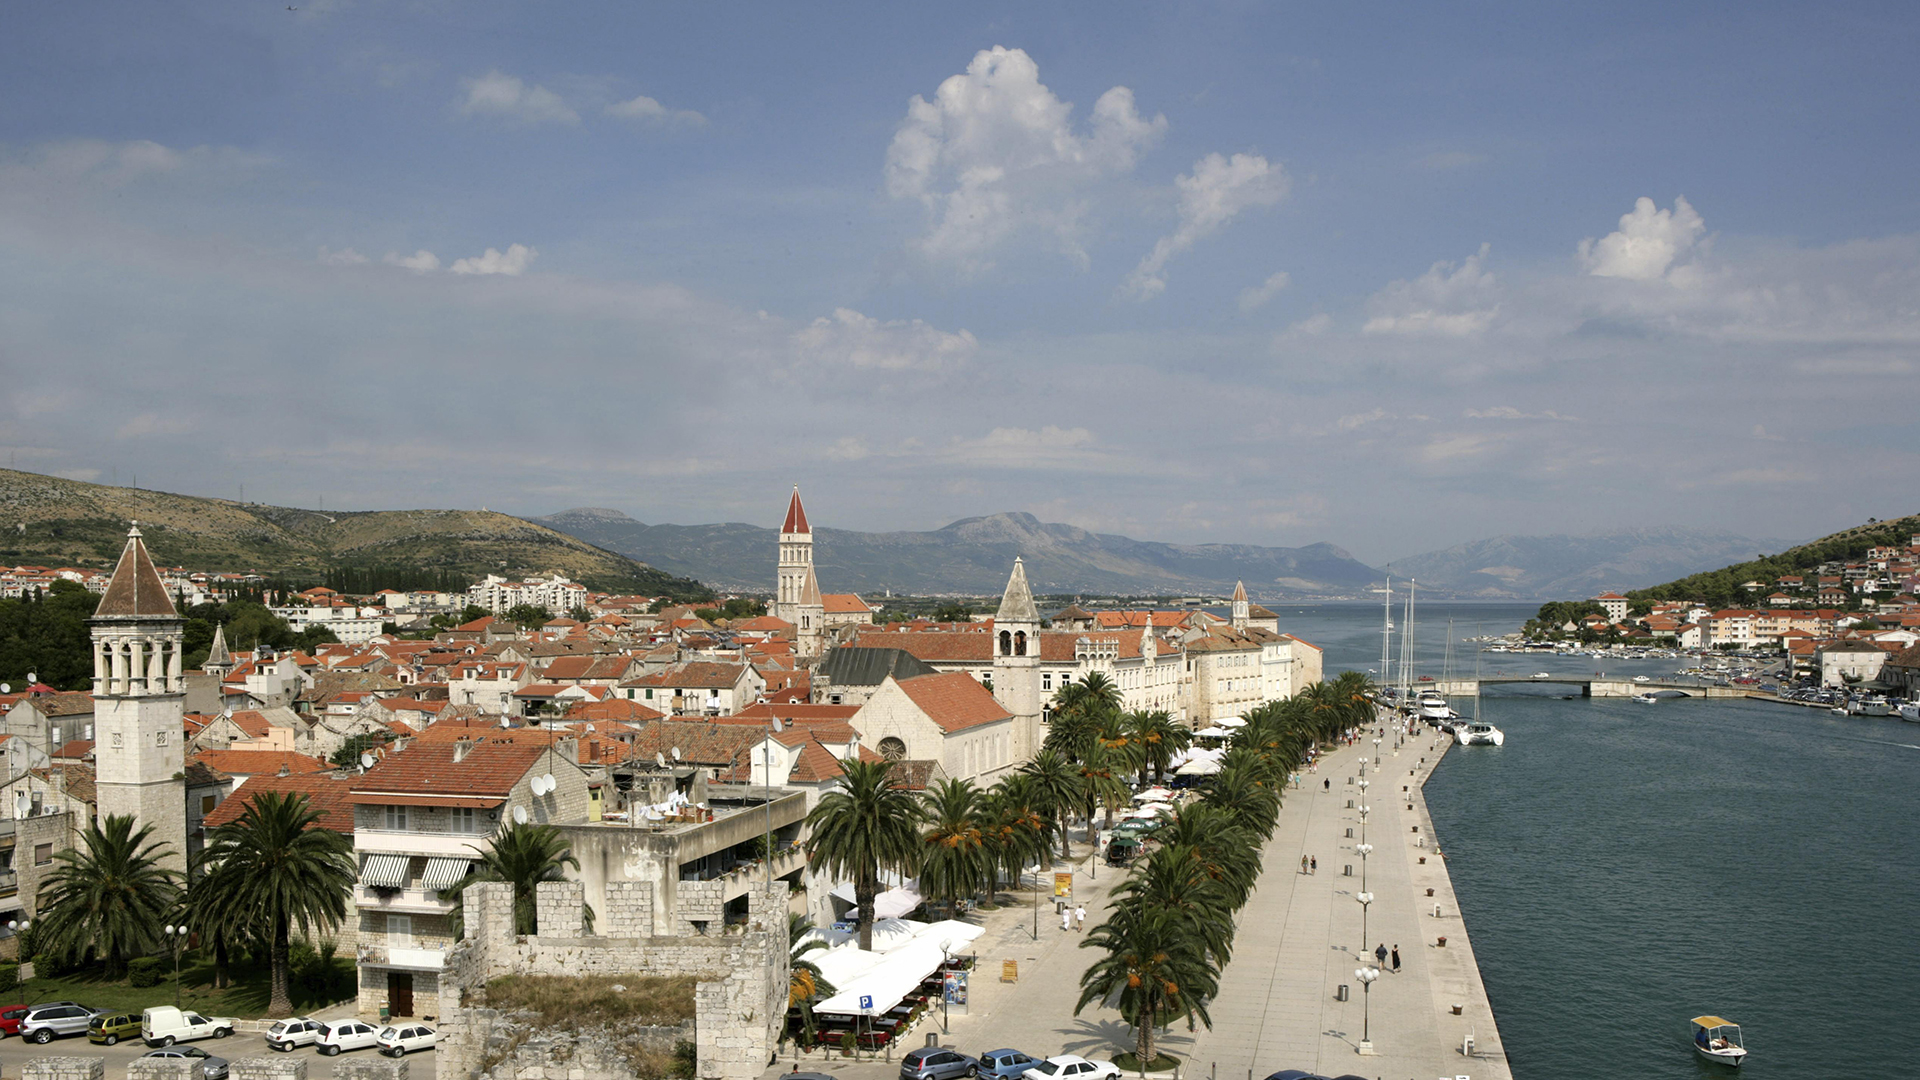 Die Inselstadt Trogir in Kroatien | picture alliance / imageBROKER